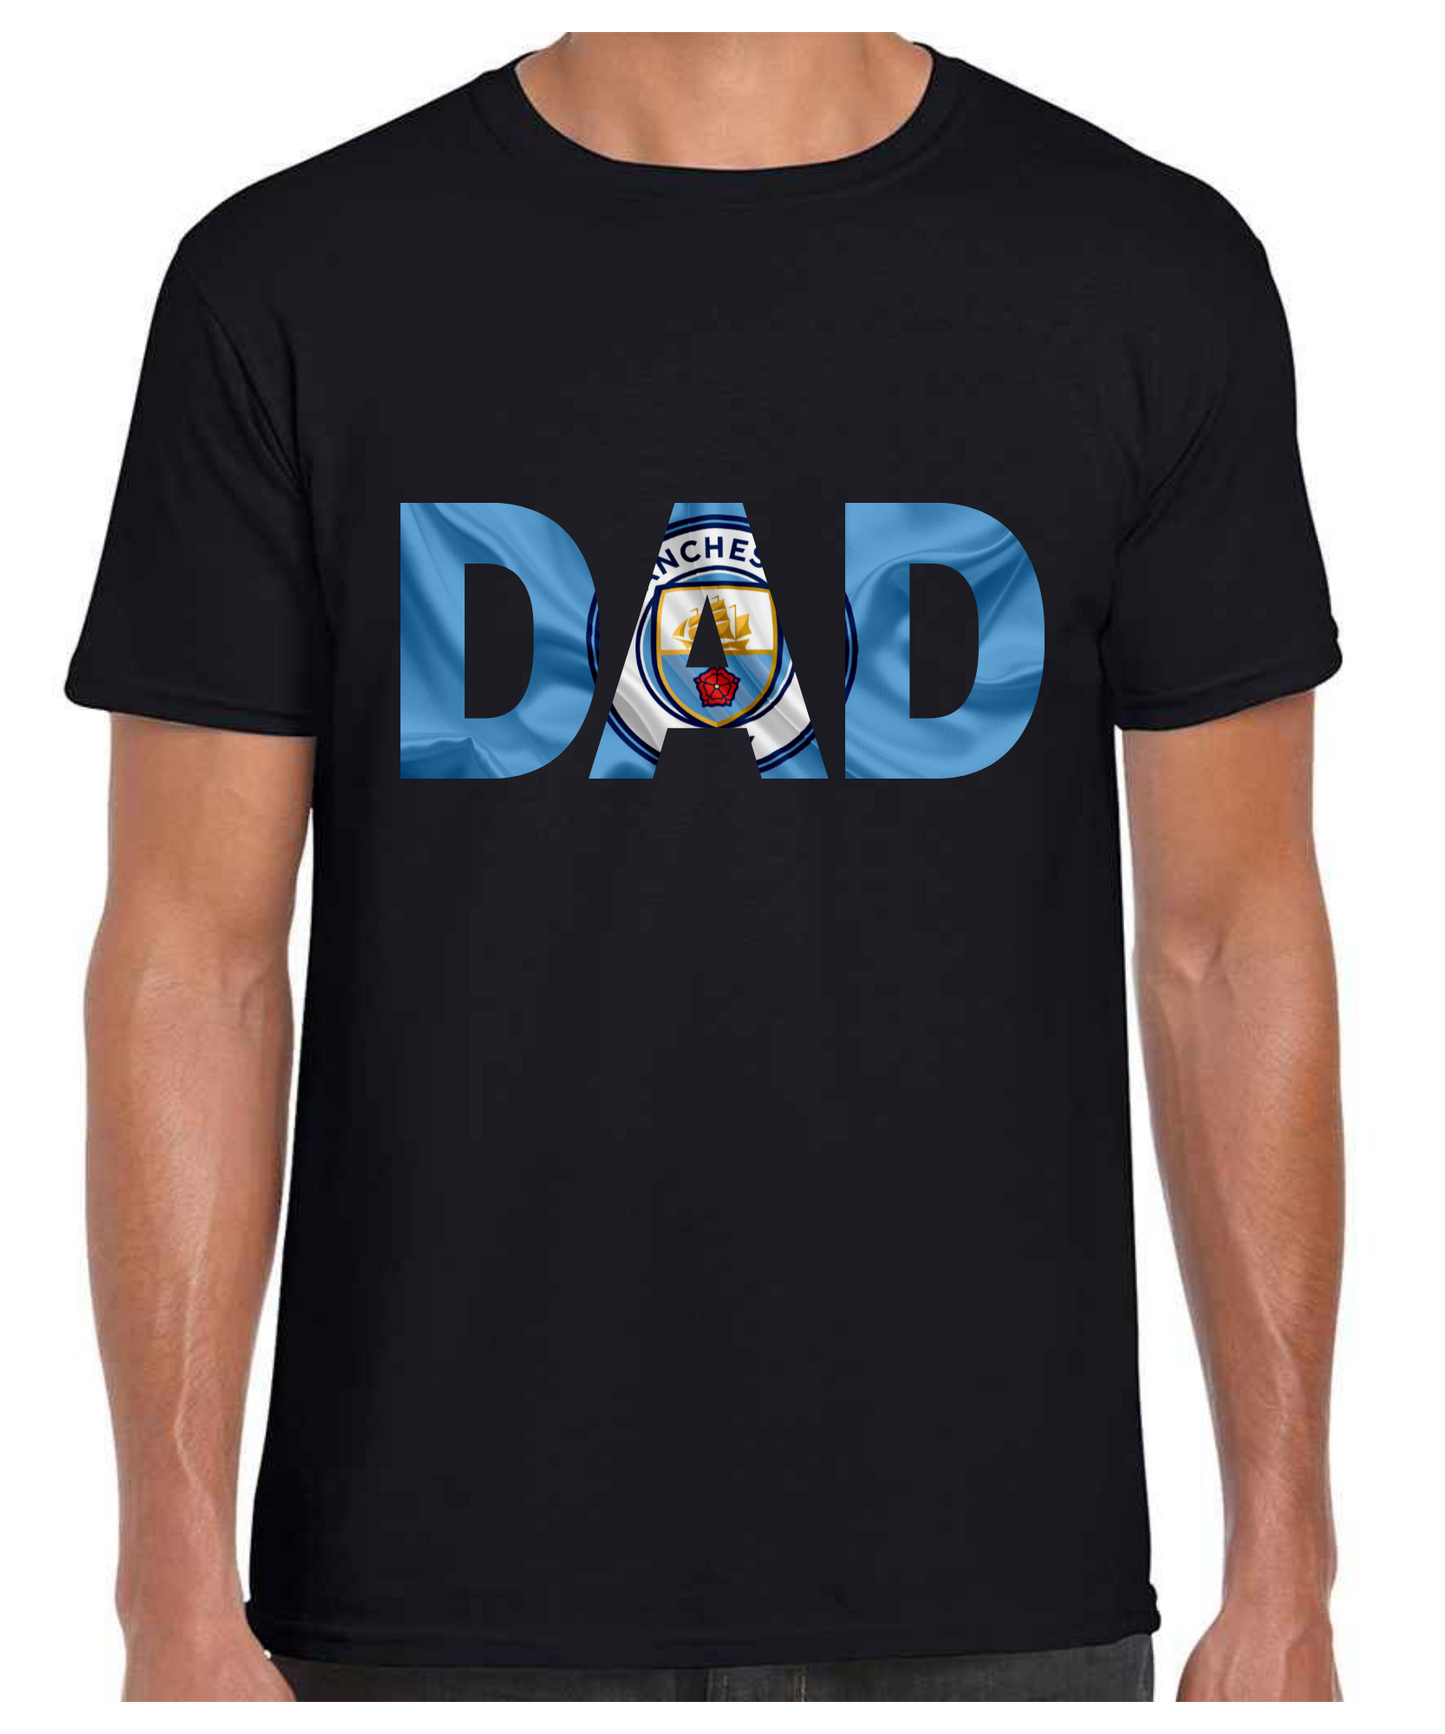 Man City - Dad T Shirt (White/Black/Grey)